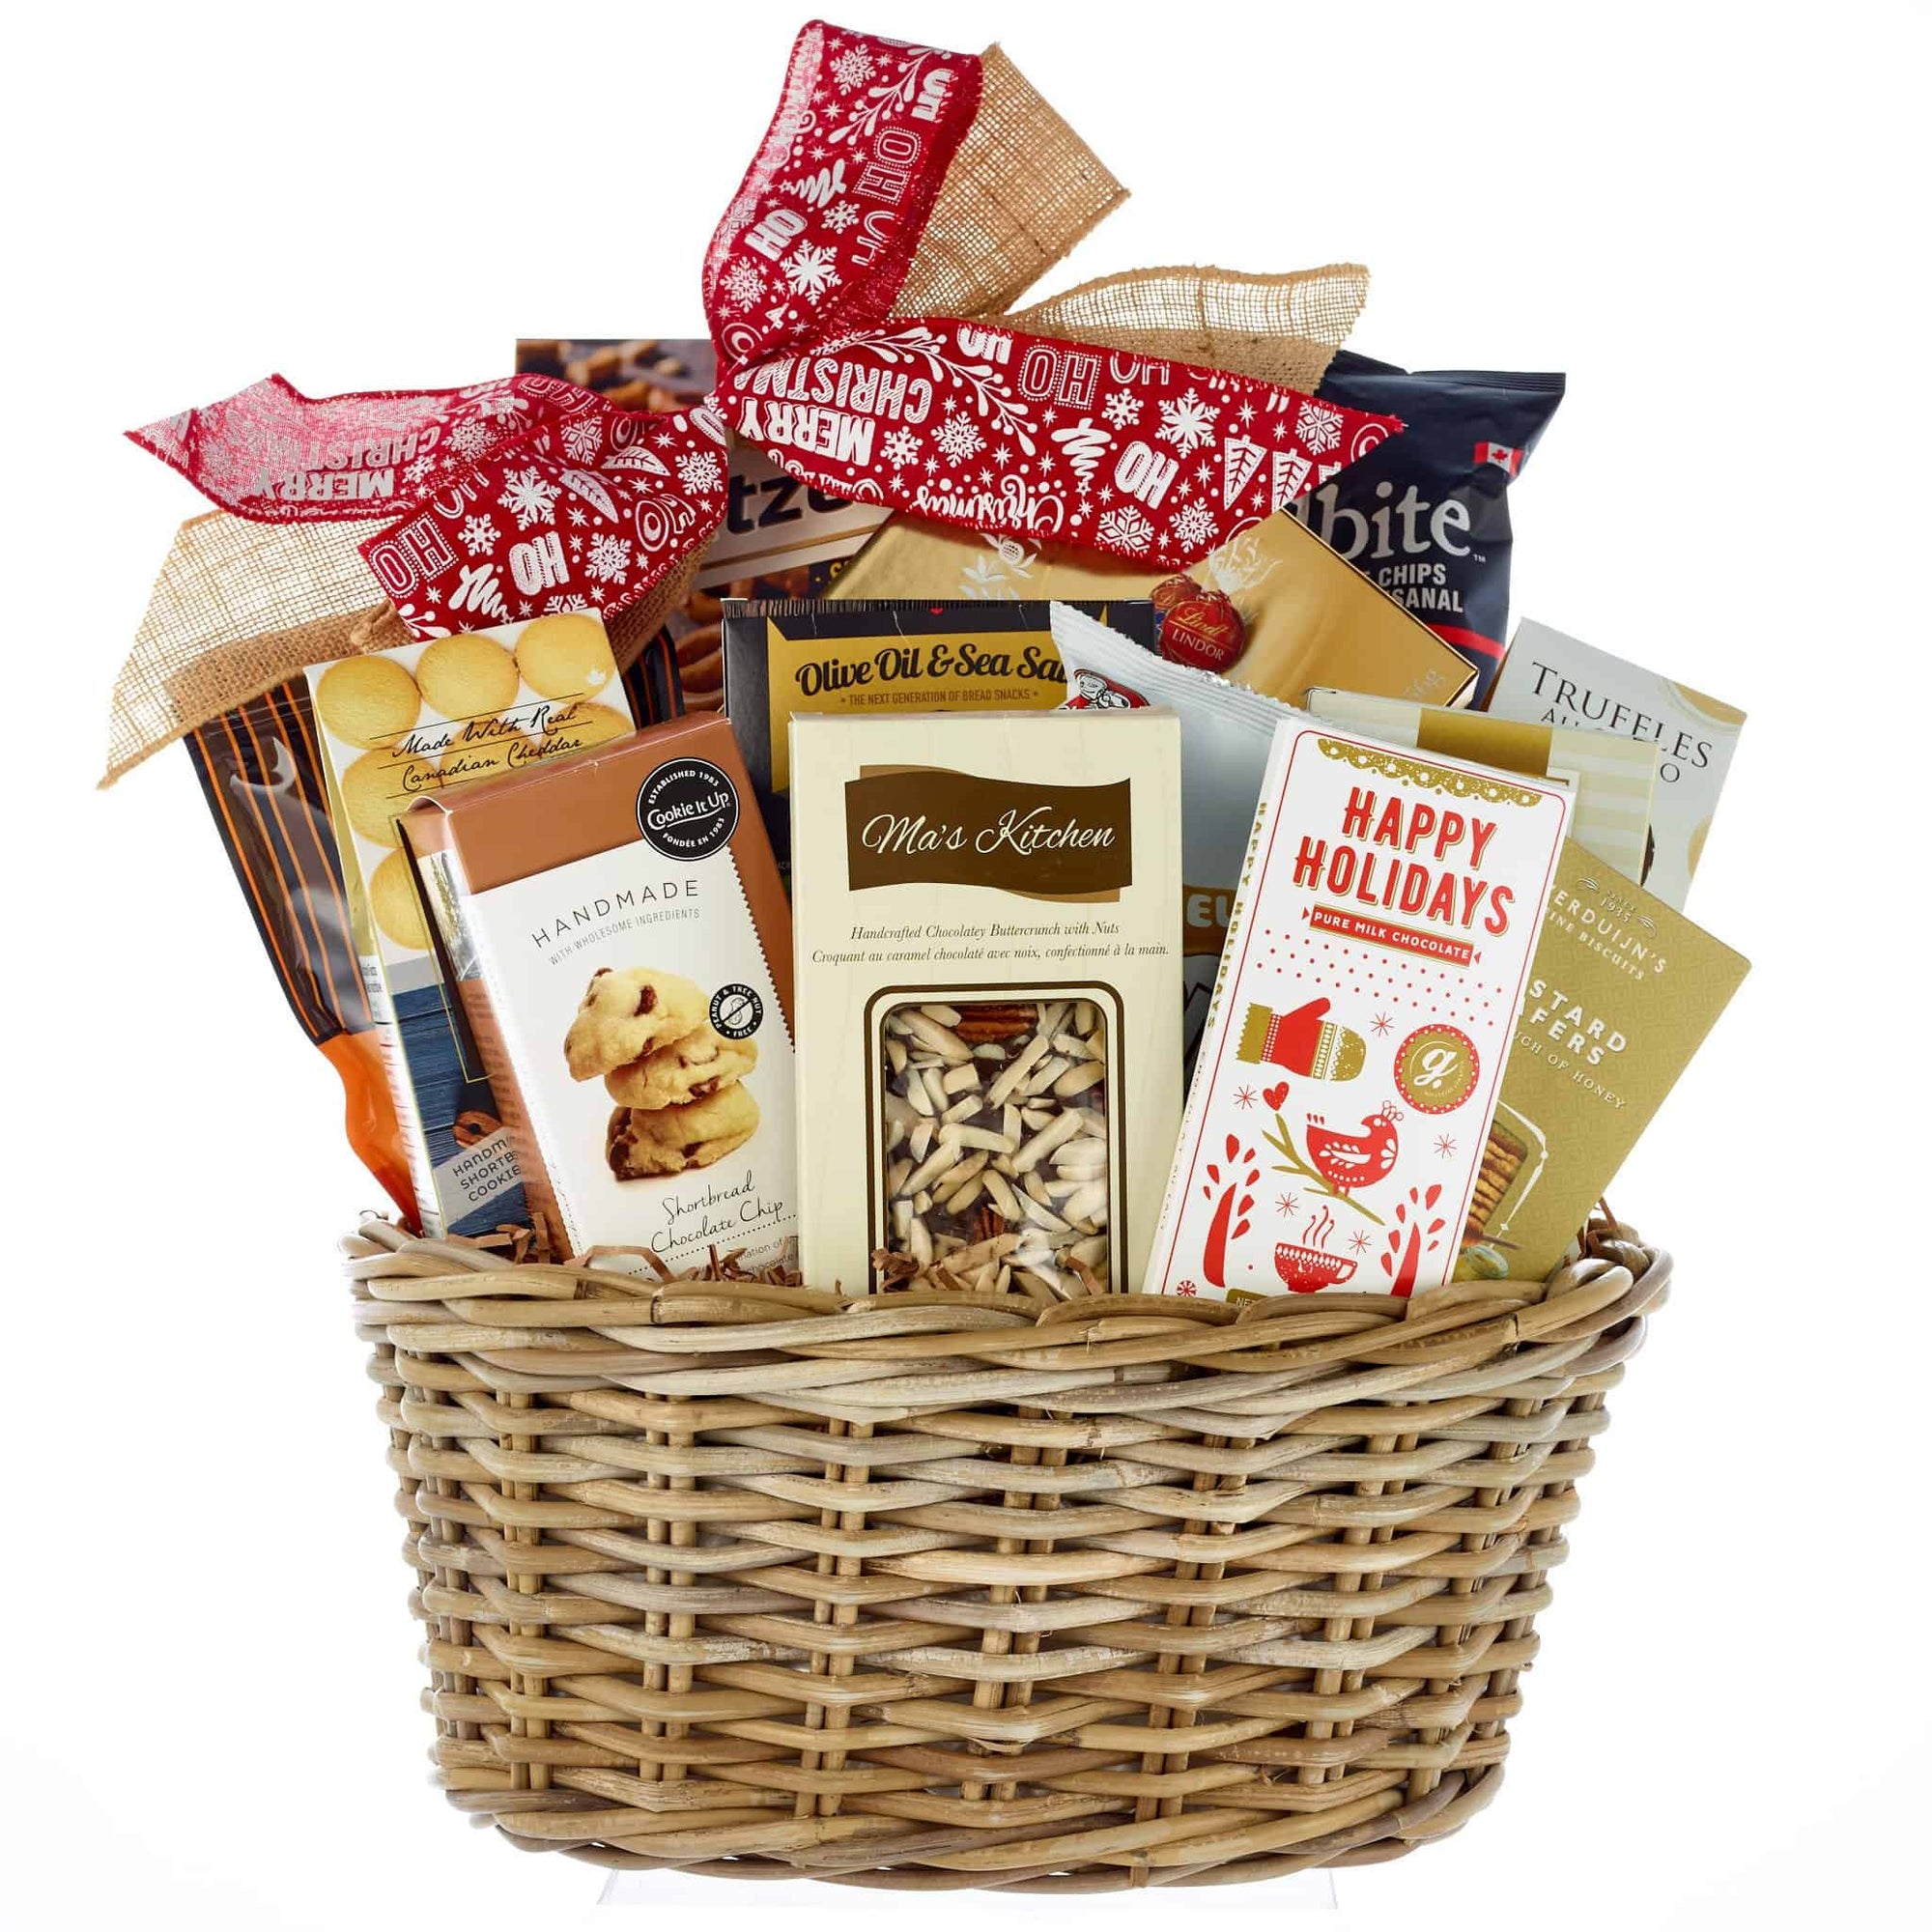 Beautiful large gift basket with chocolates